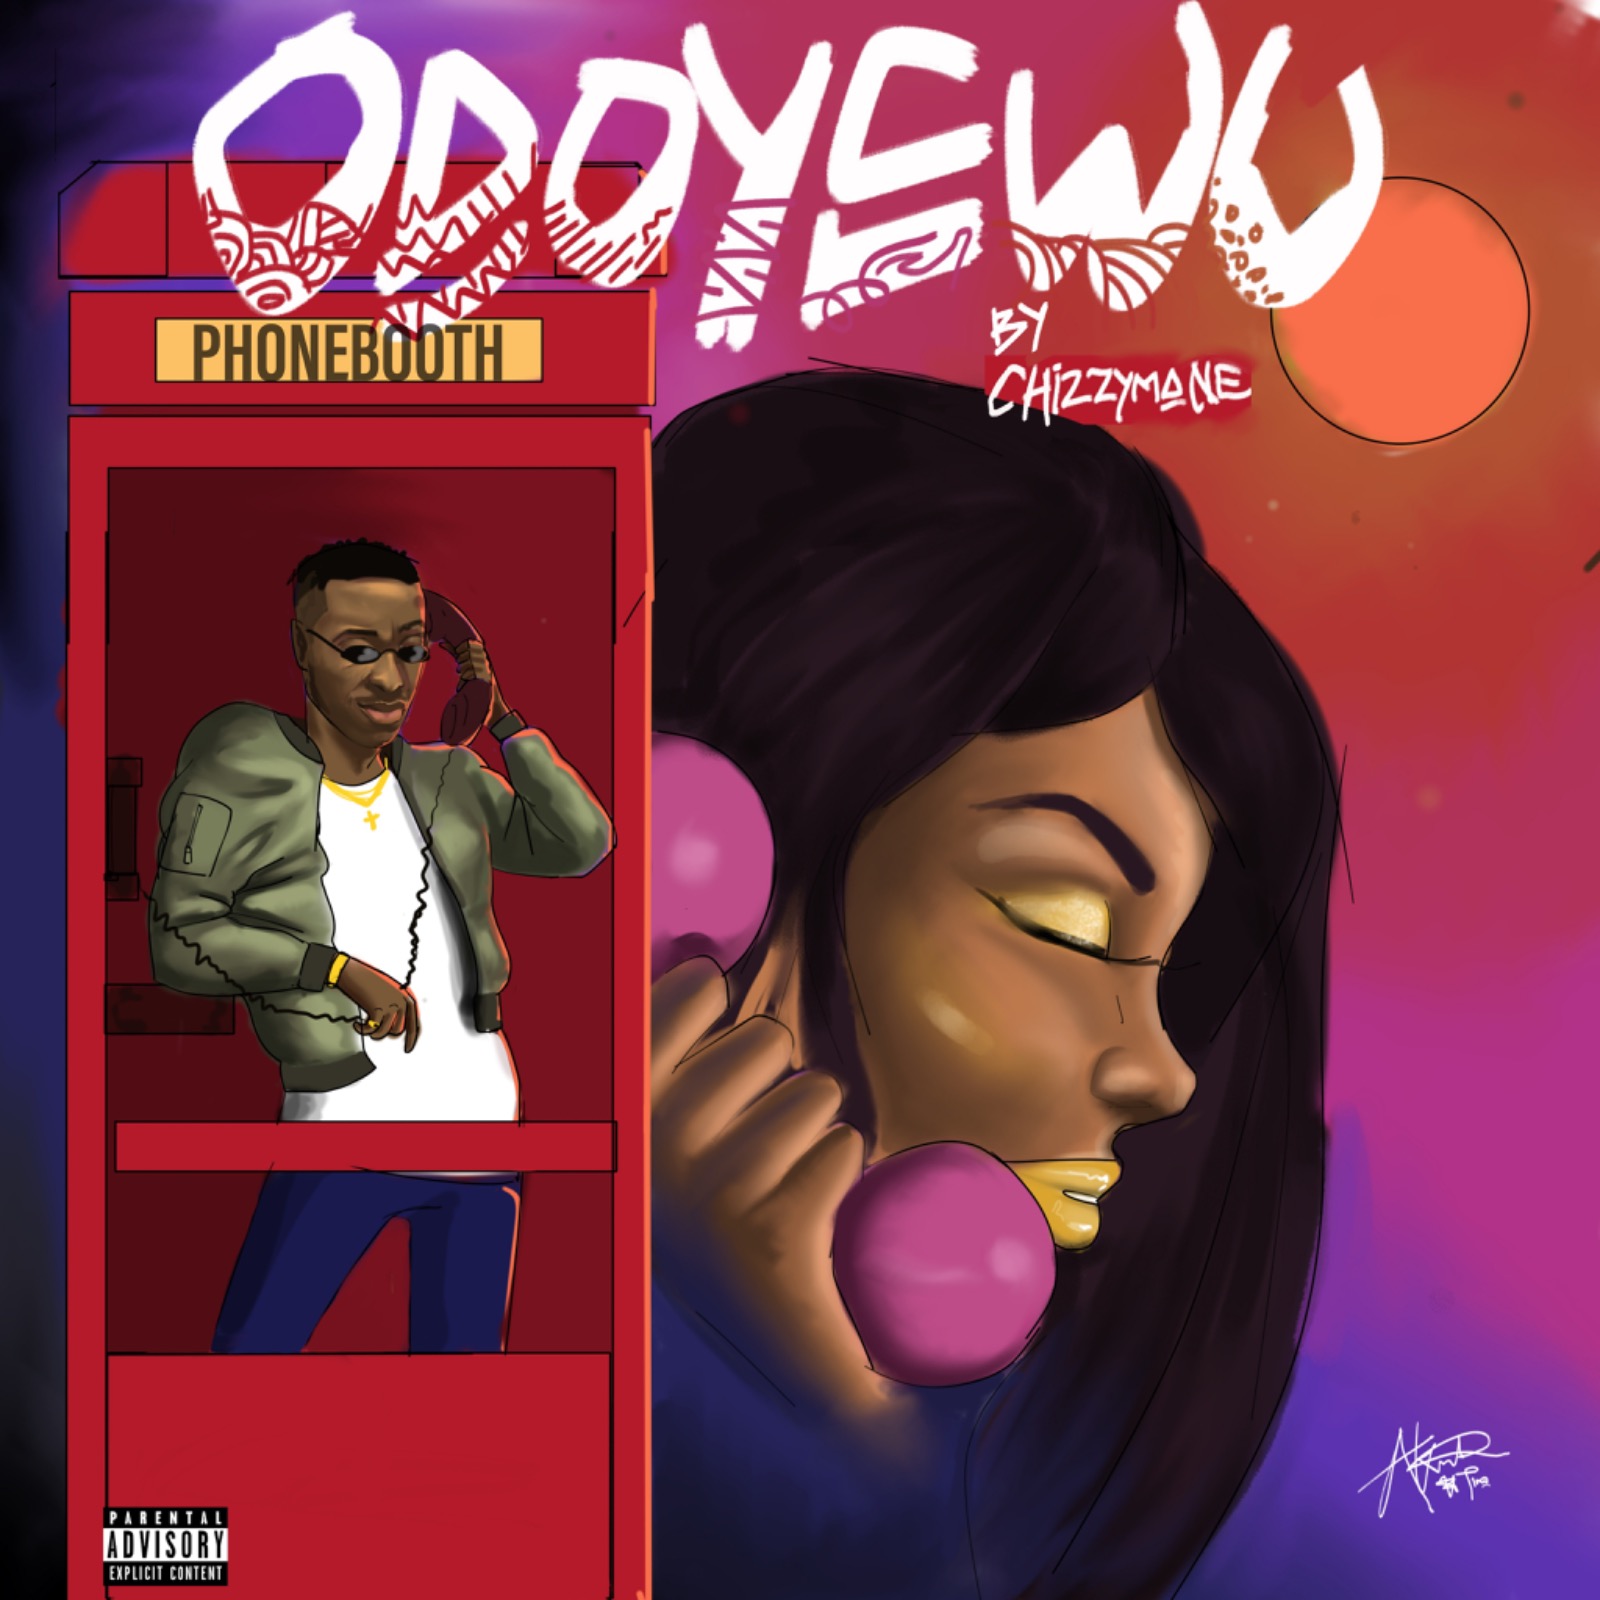 Odoyewu--Chizzymane